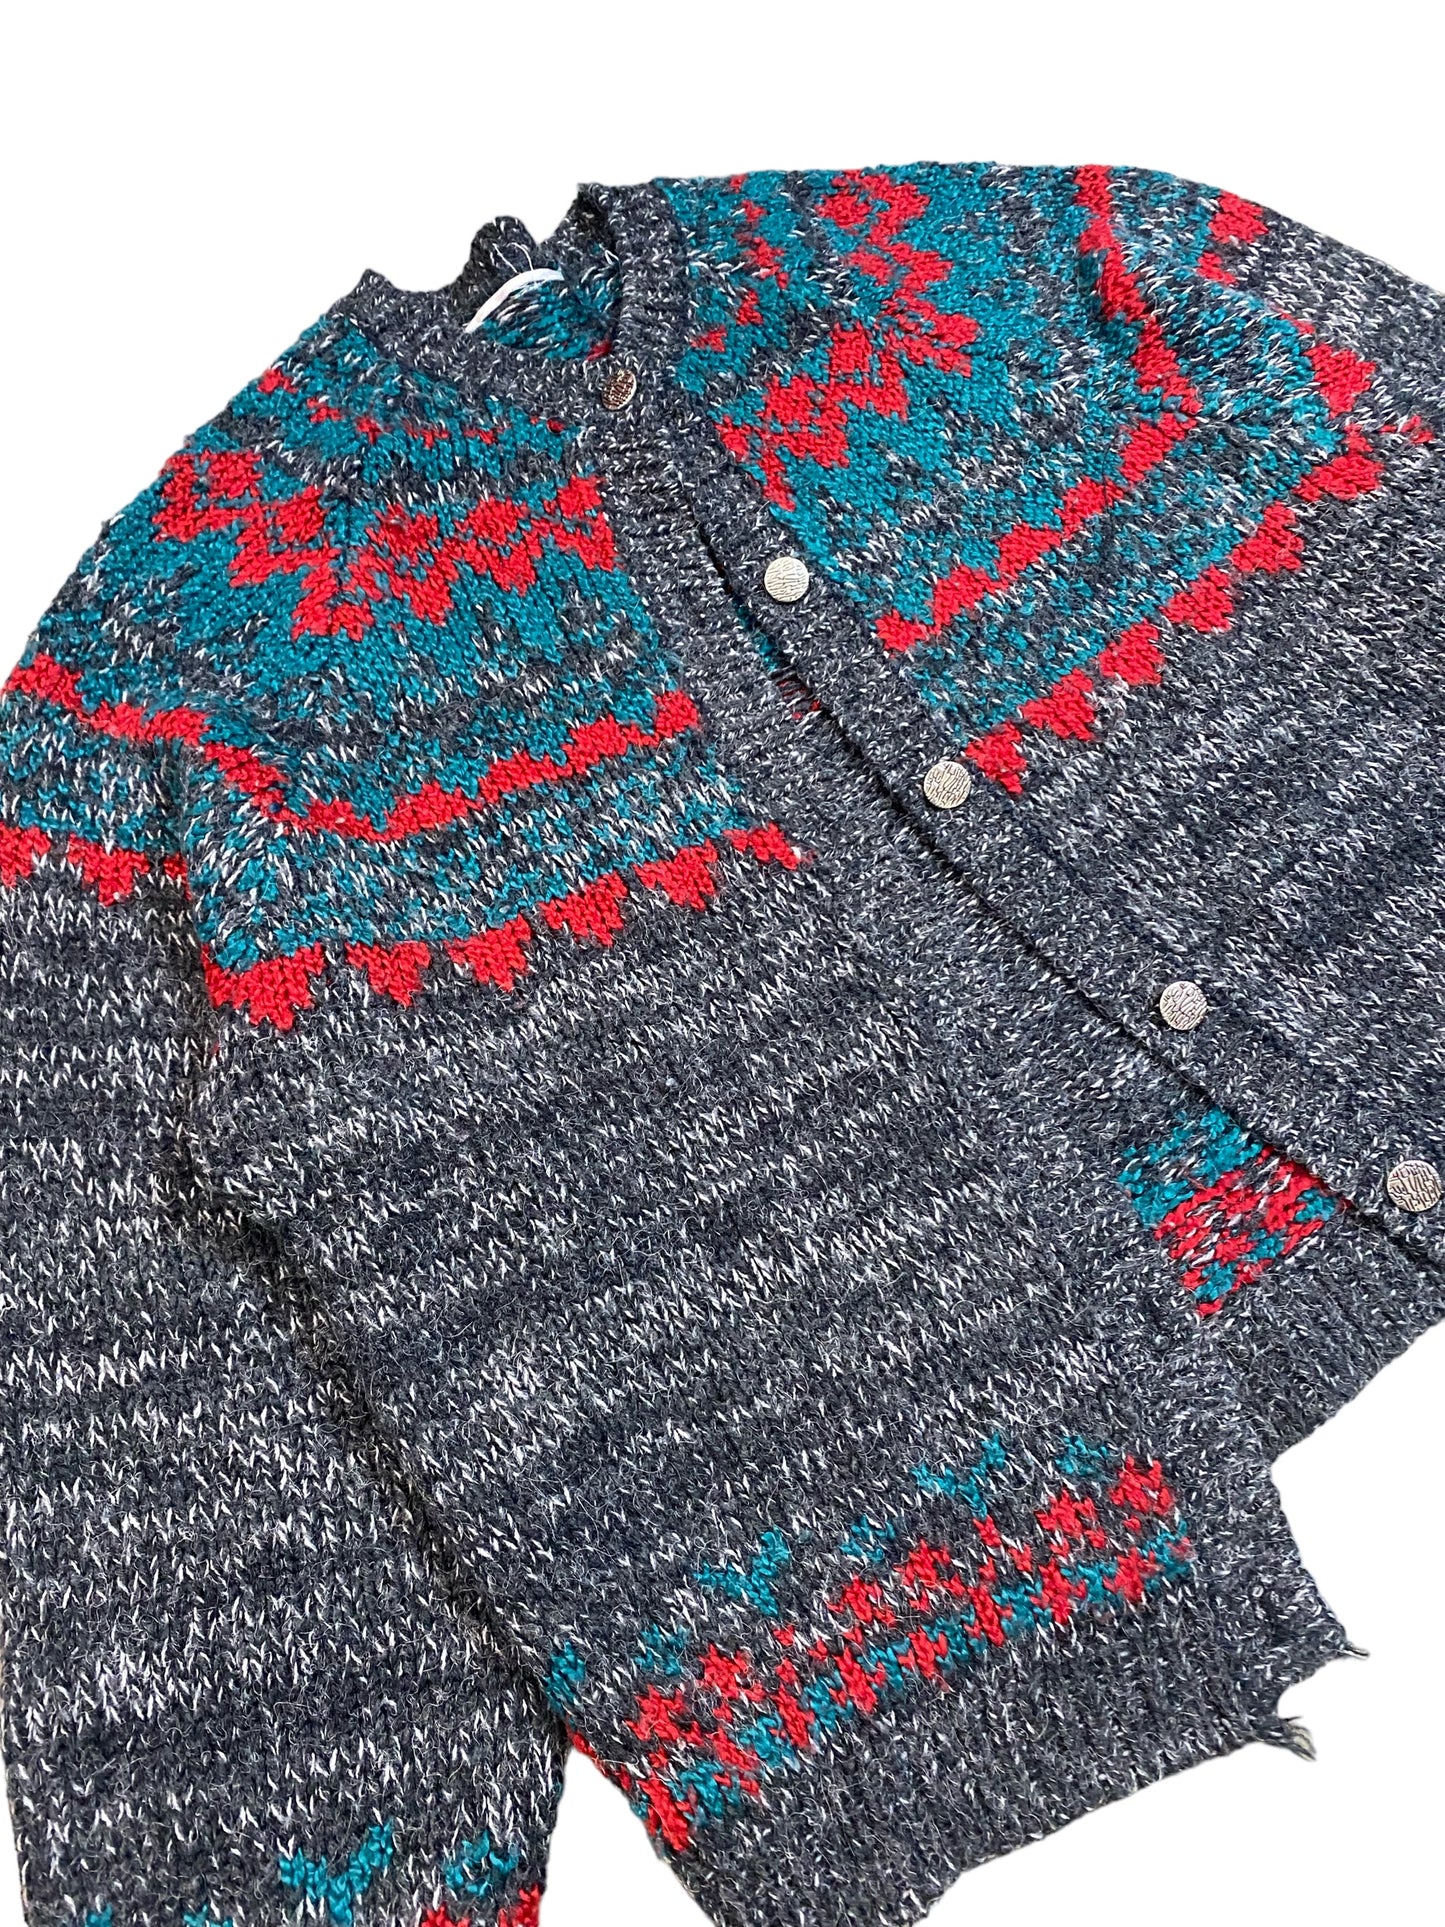 90s Wool Knit Holiday Cardigan (L)